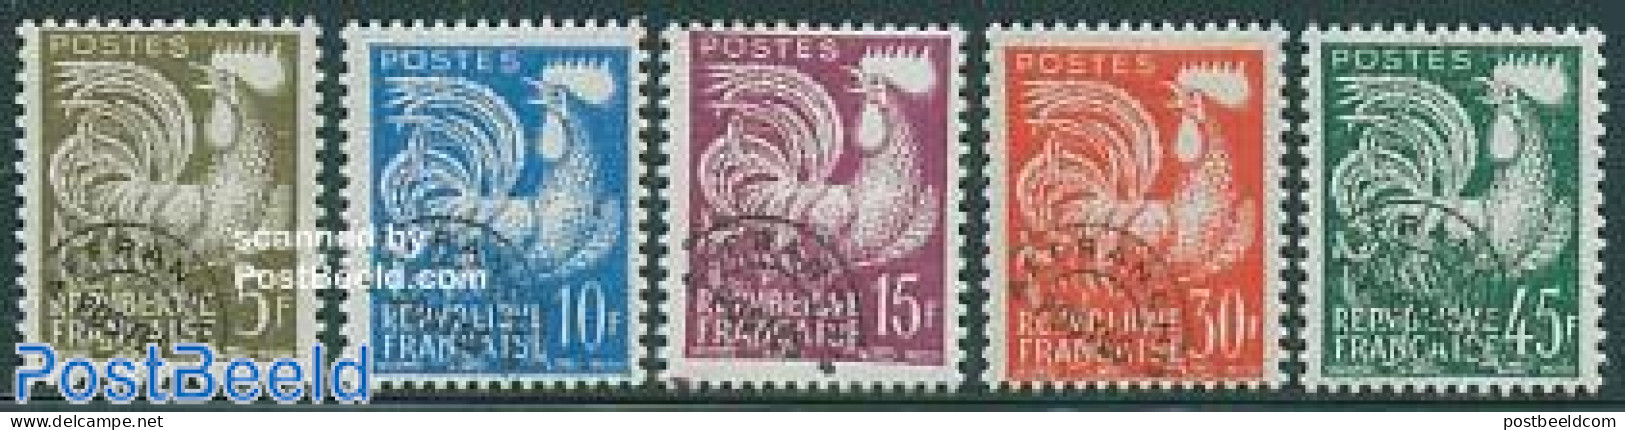 France 1957 Pre Cancels 5v, Mint NH, Nature - Poultry - Unused Stamps